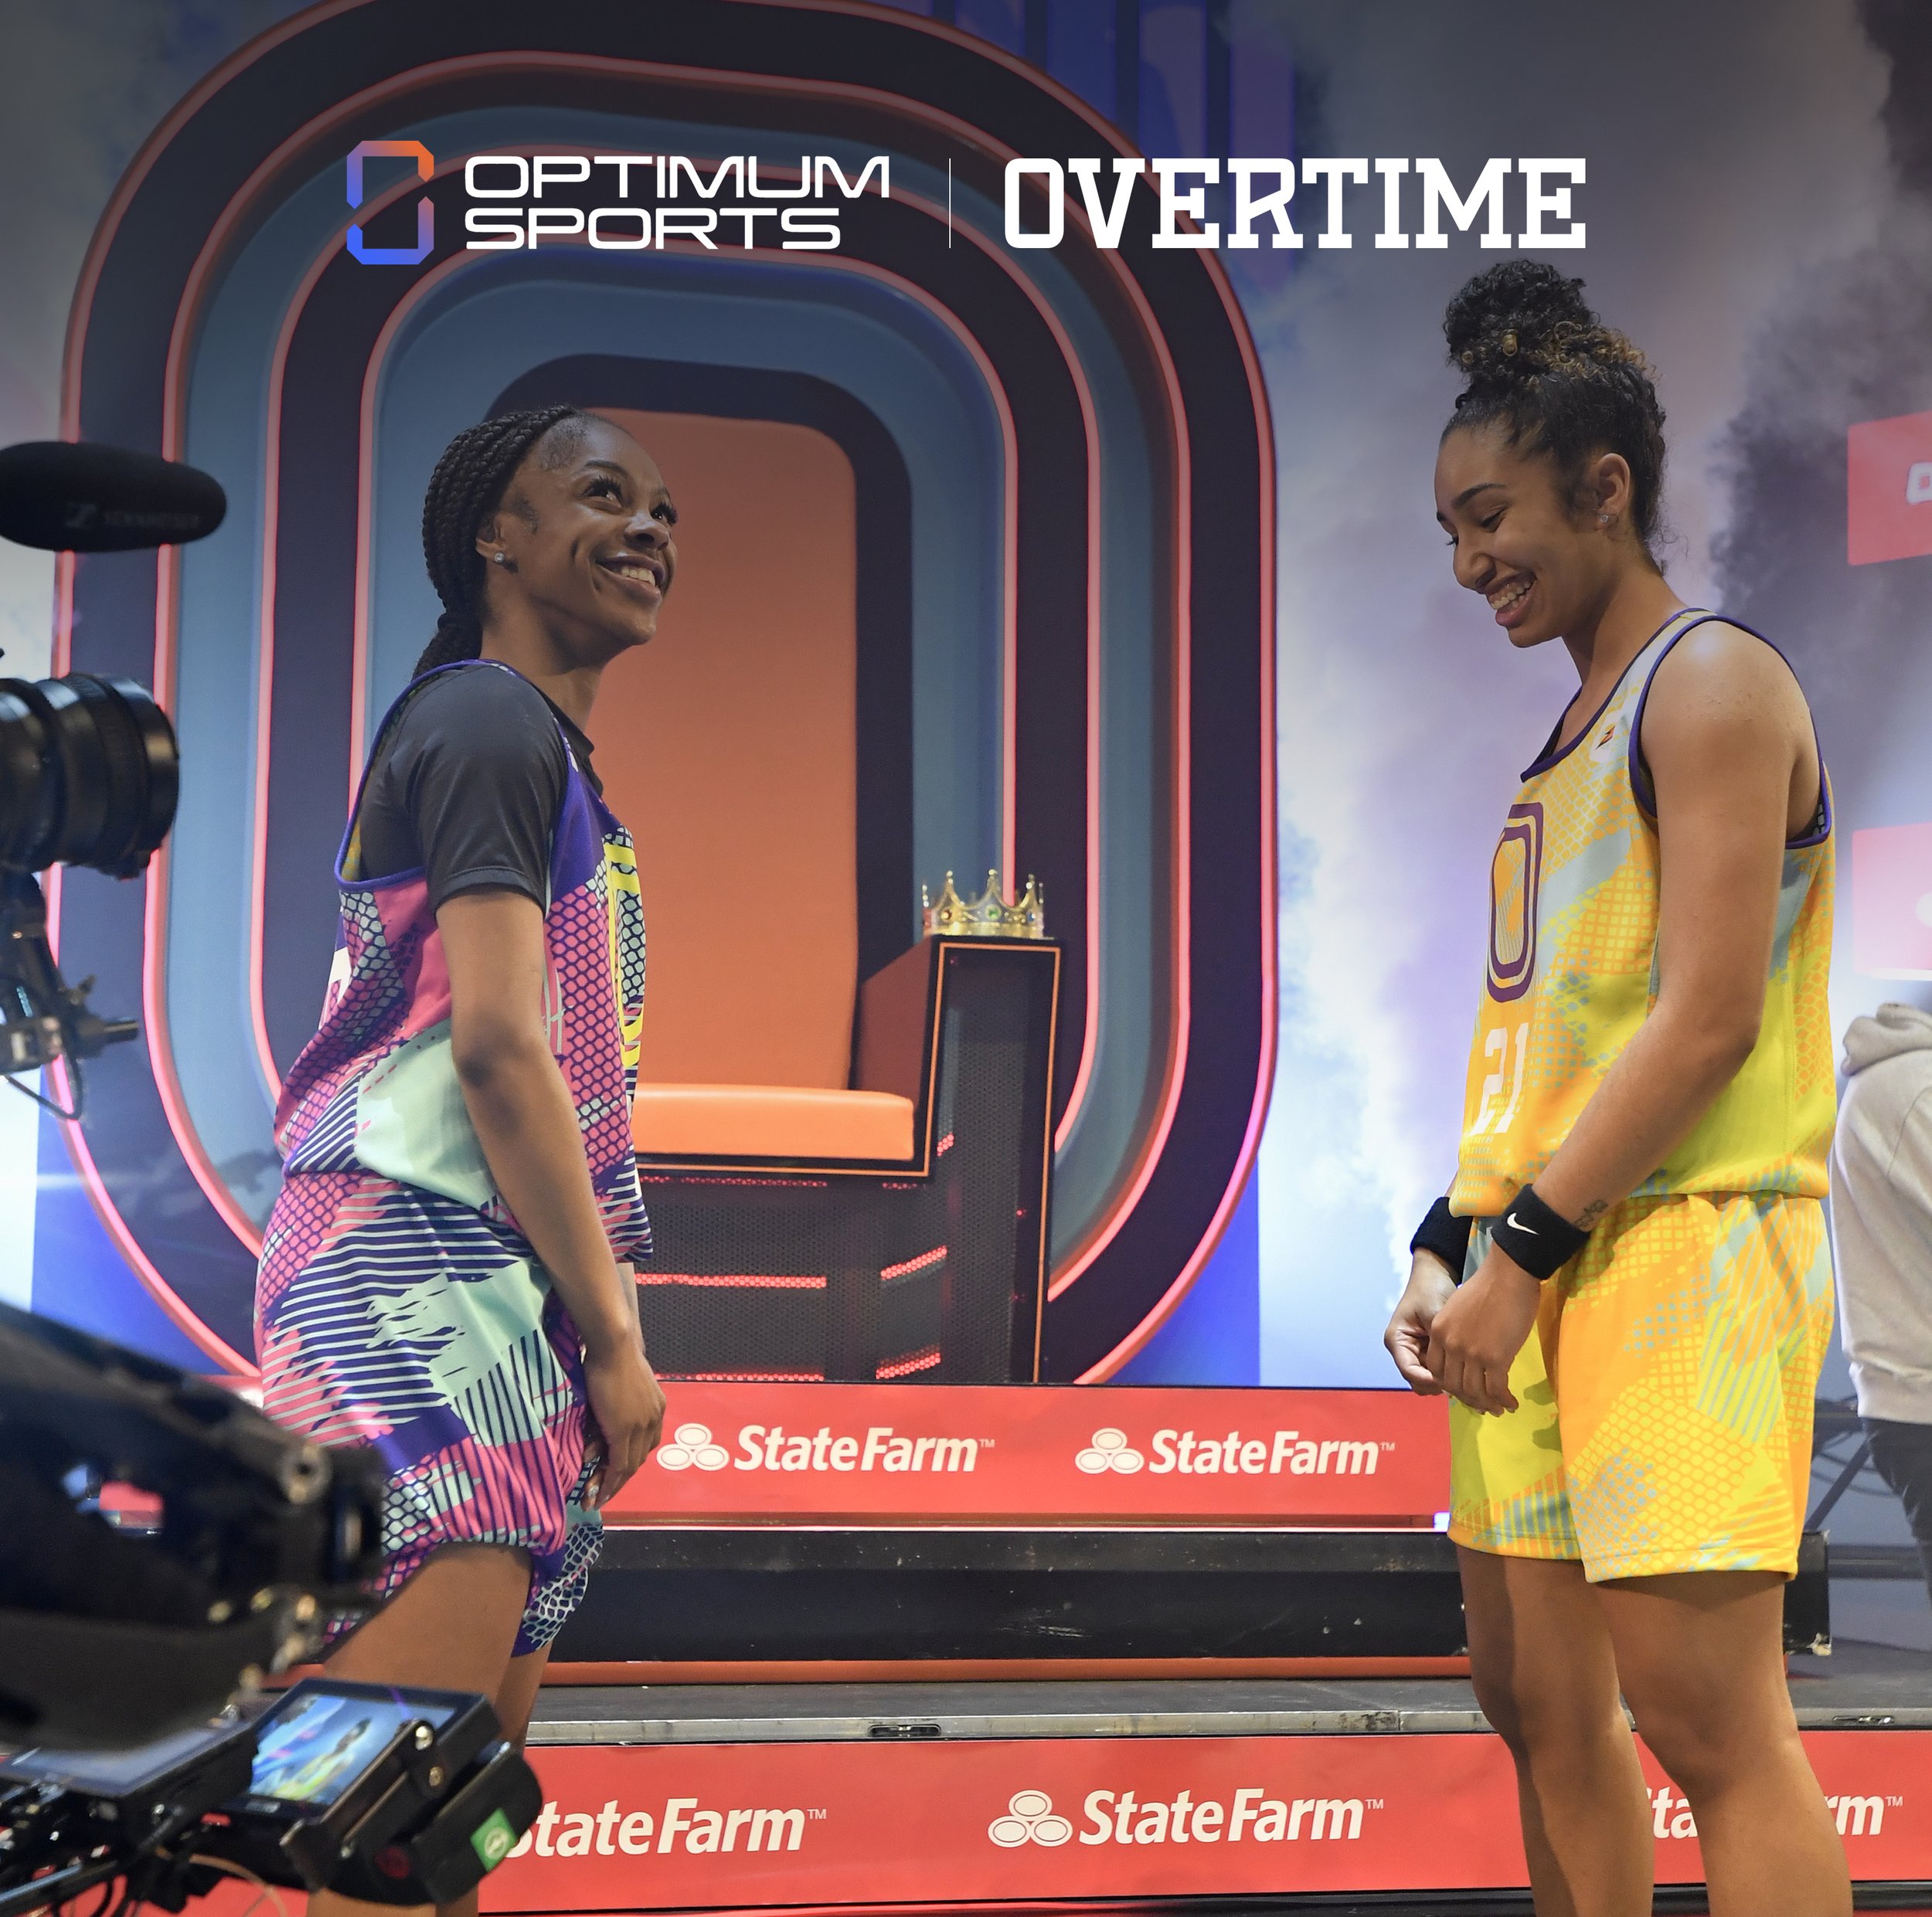 OS Overtime WNBA Event alt 3.jpg